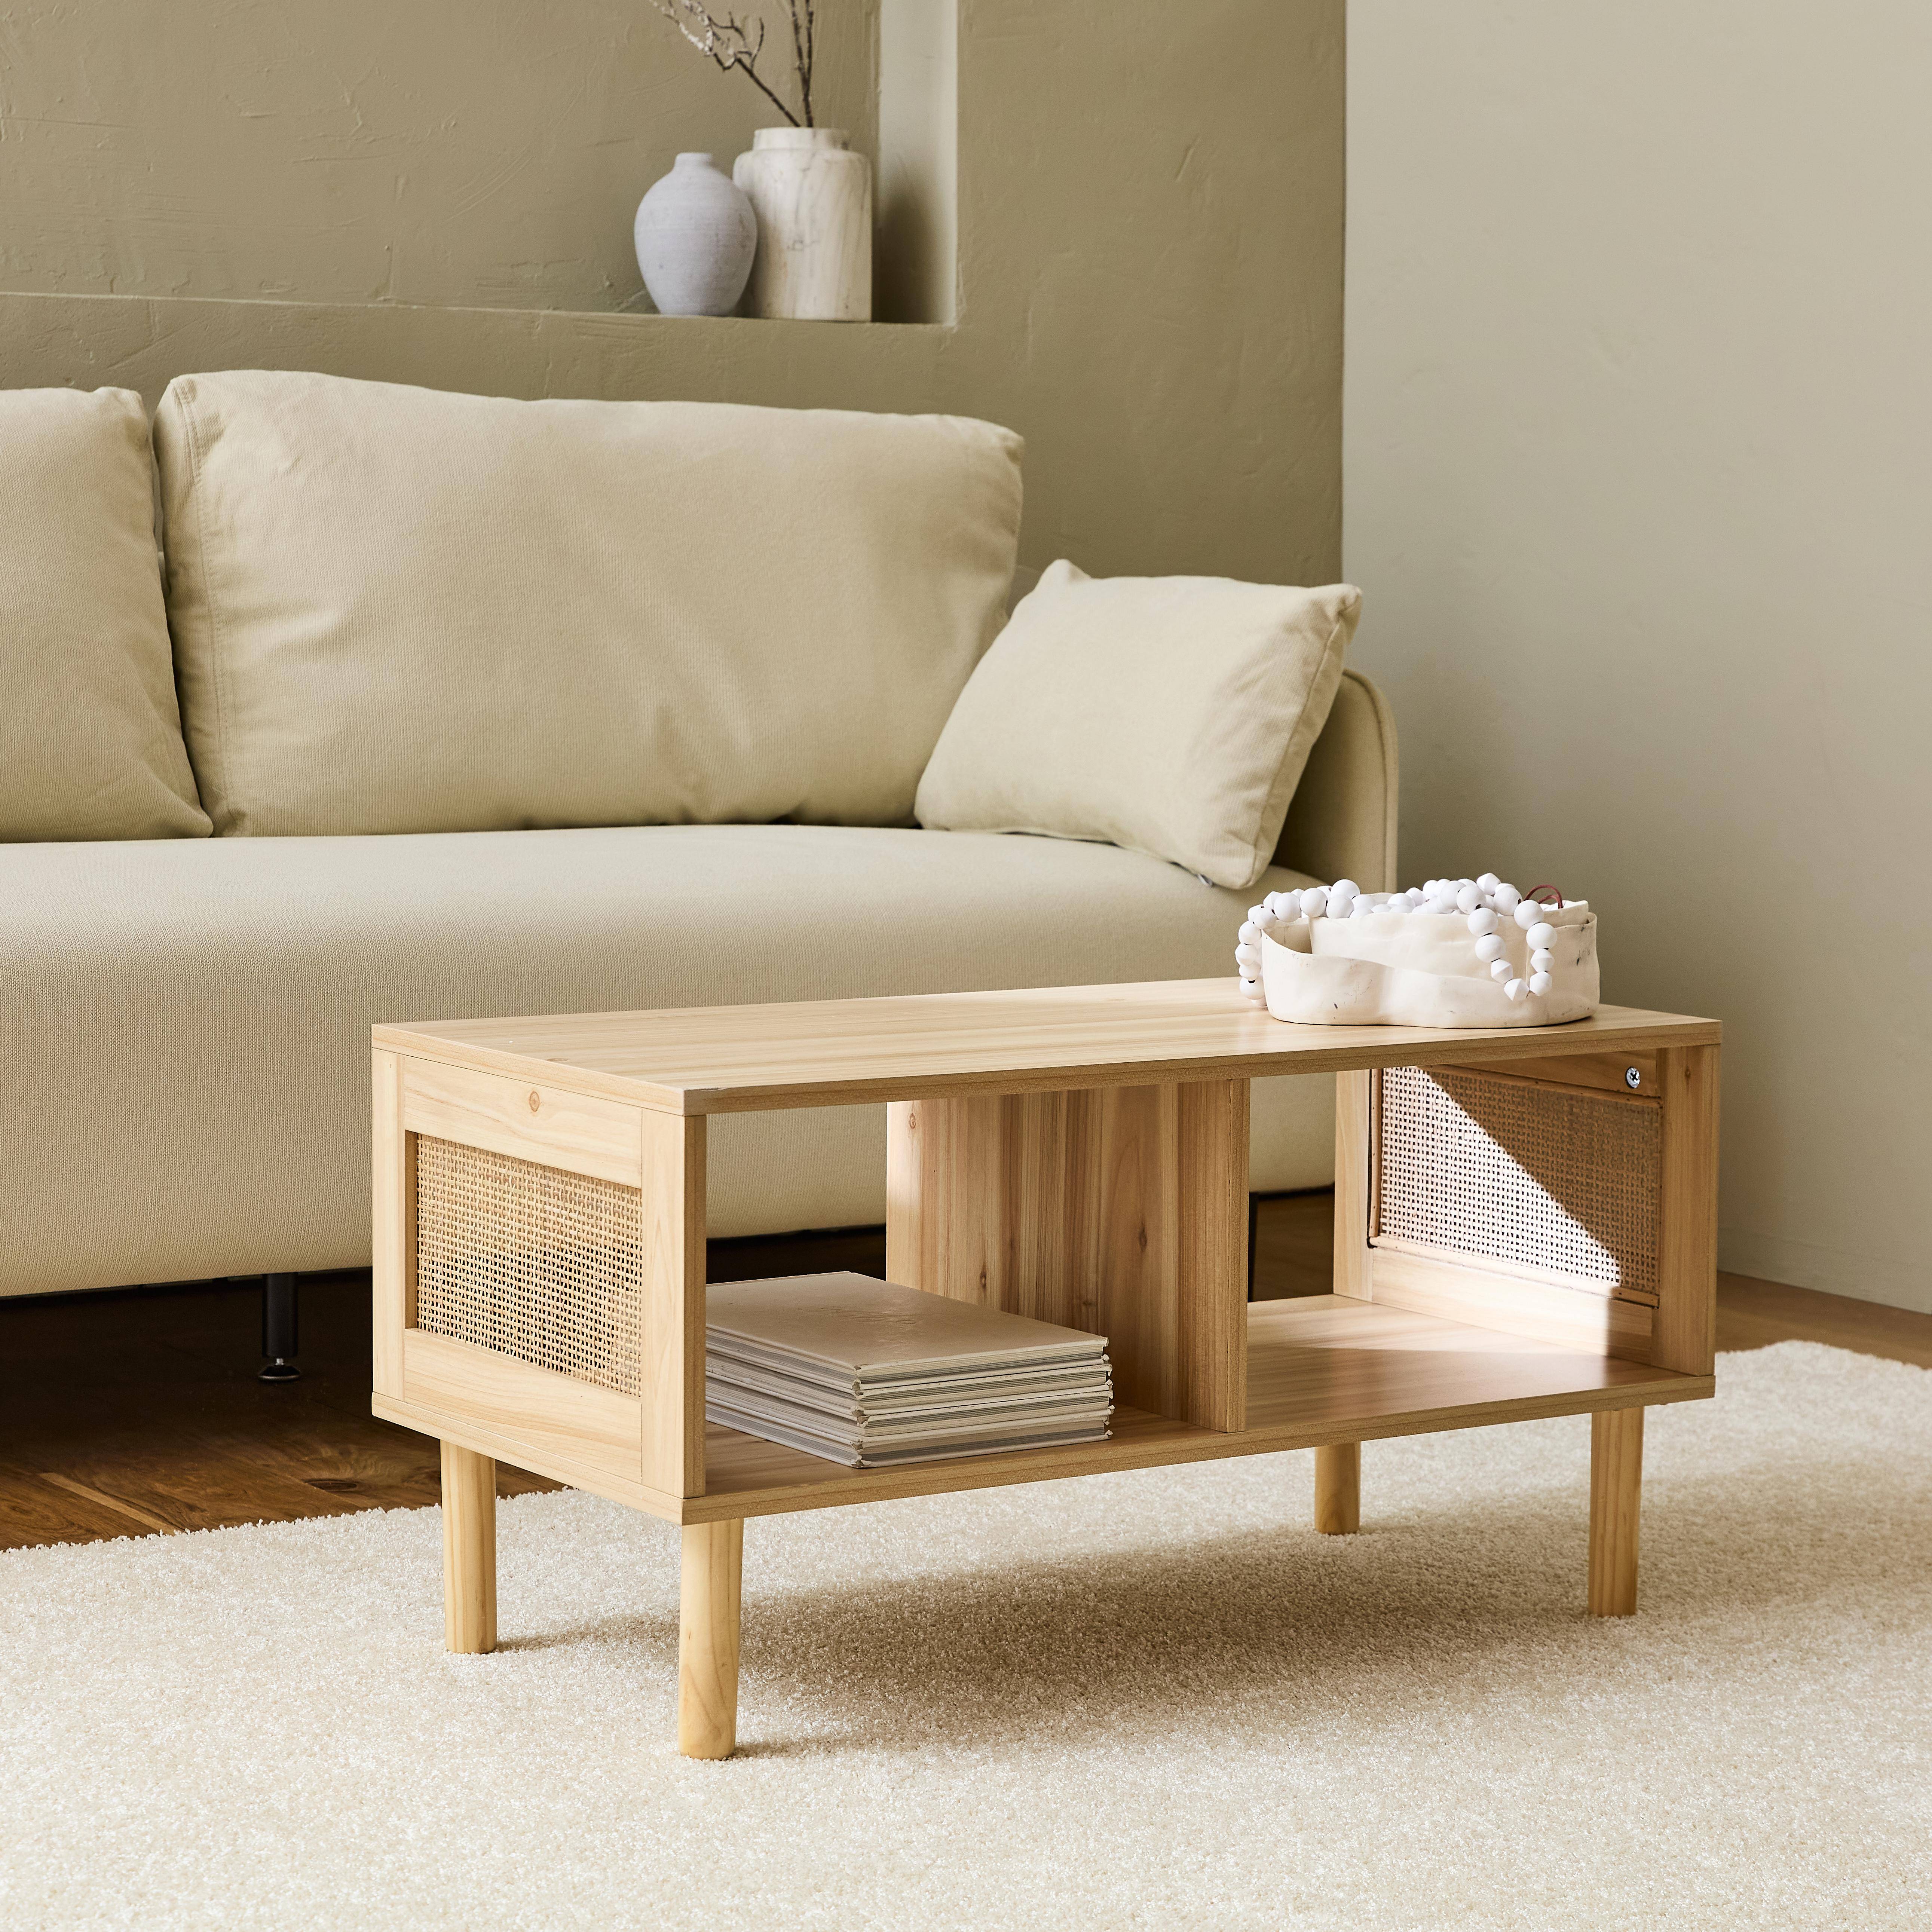 Woven rattan coffee table, 80x40x40cm, Camargue, Natural wood colour,sweeek,Photo1